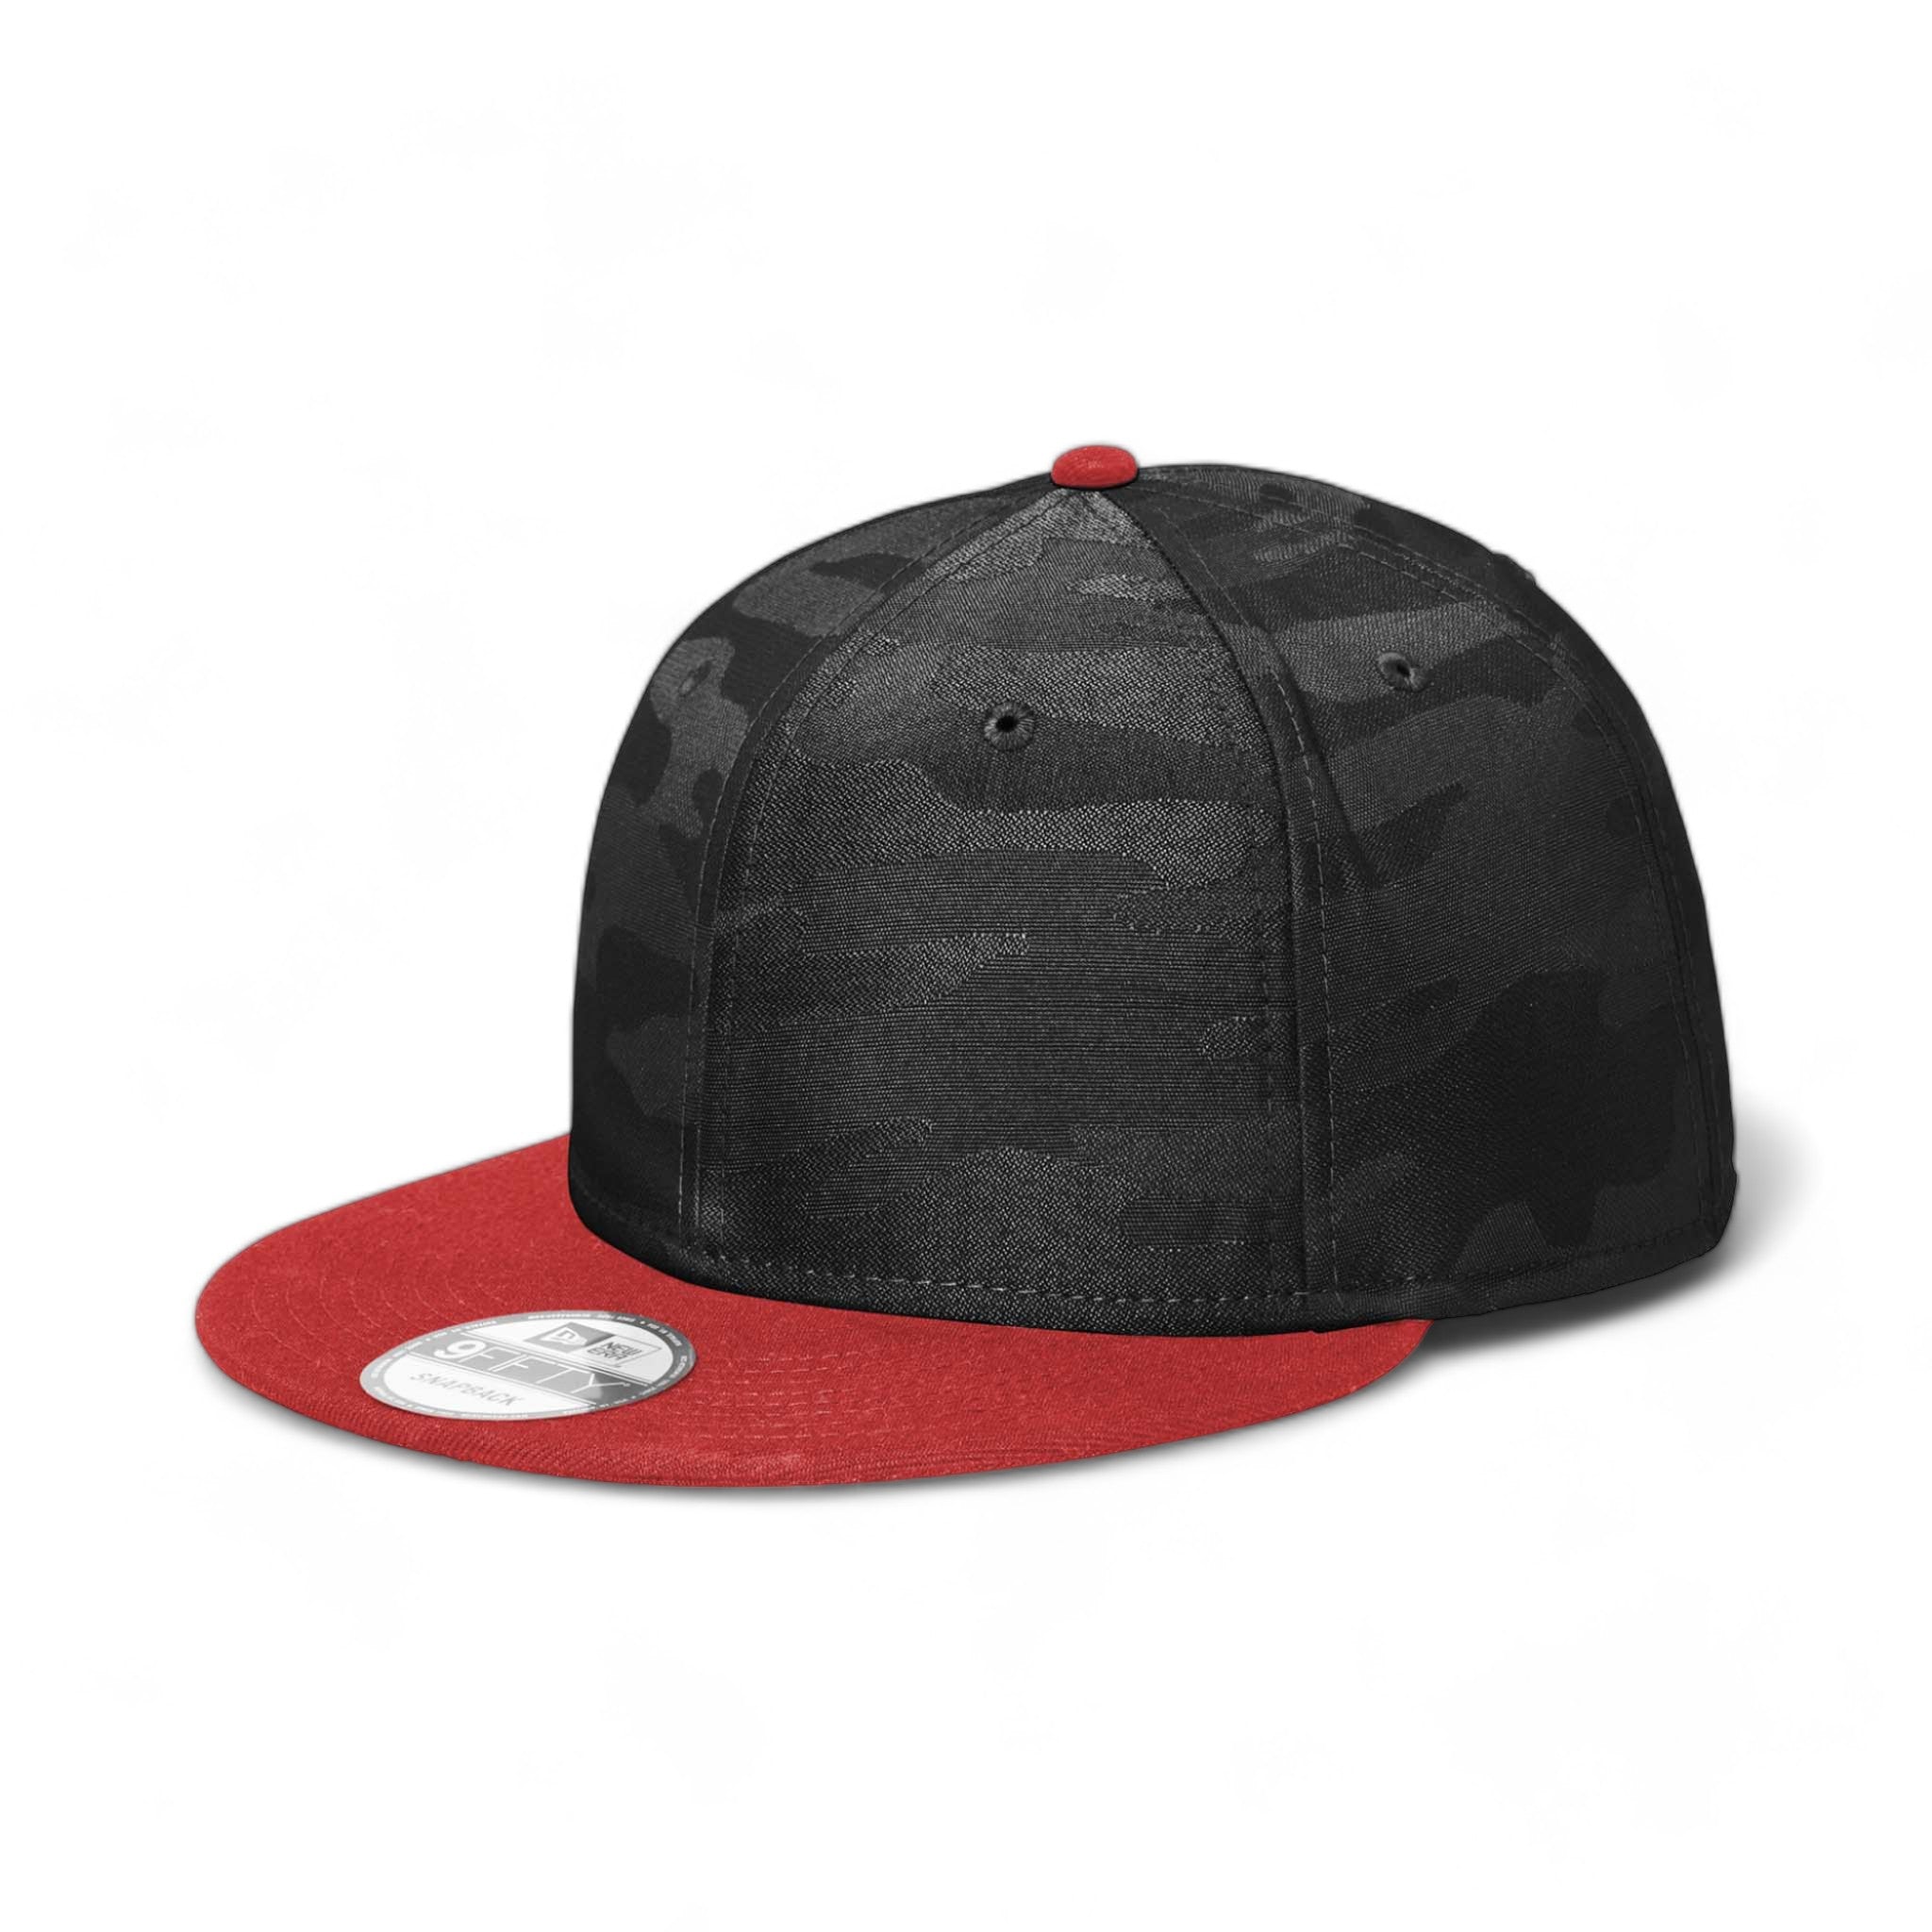 Side view of New Era NE407 custom hat in scarlet and black camo